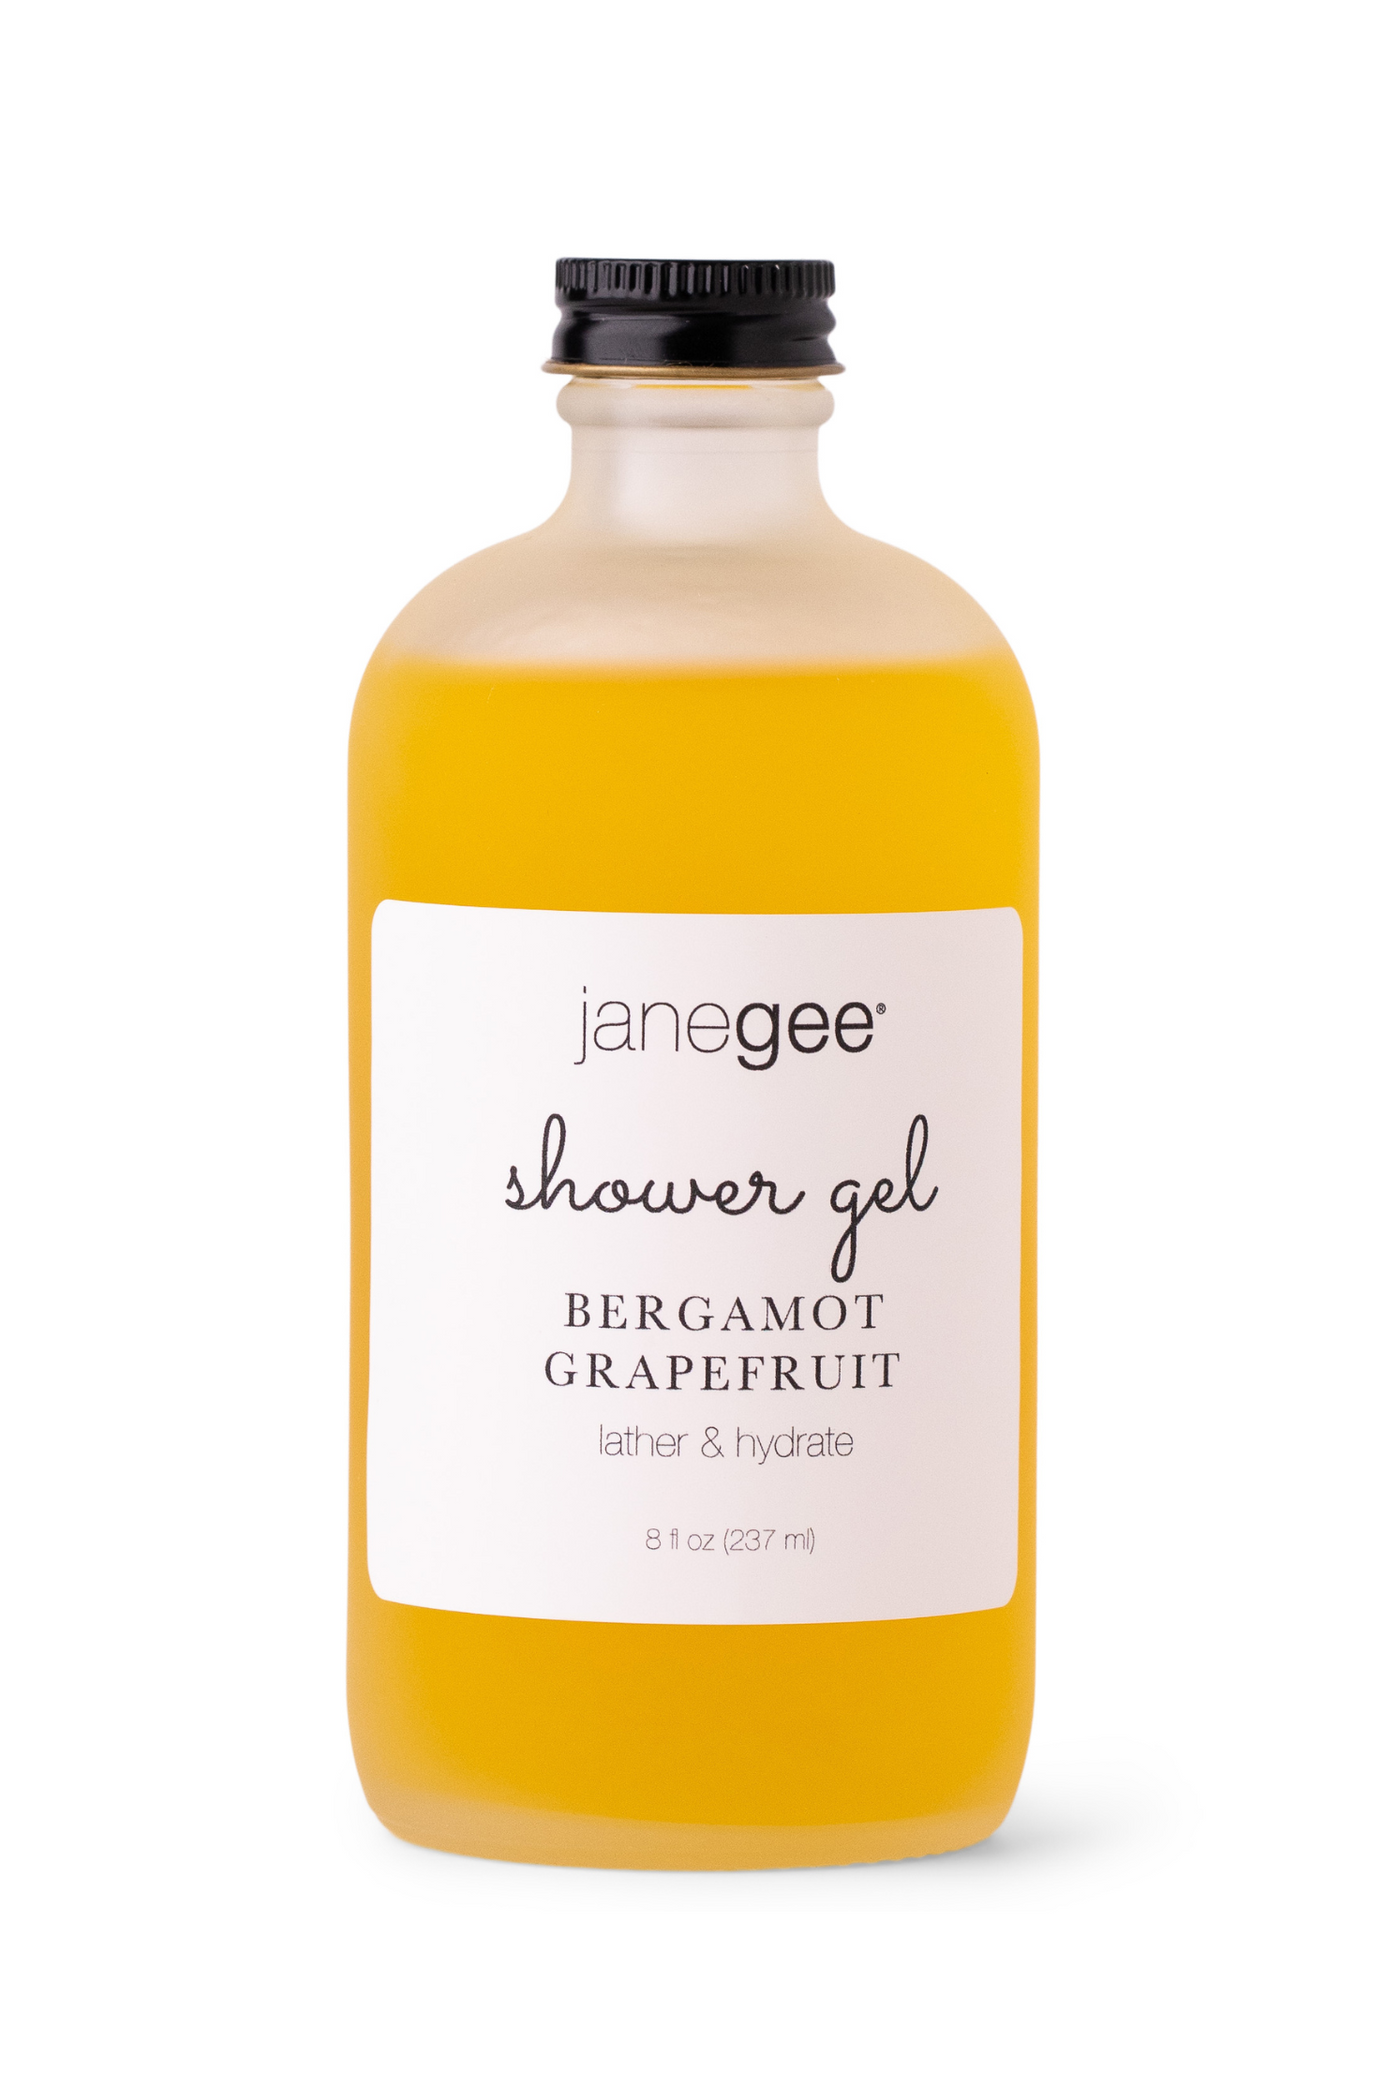 janegee Bergamot Grapefruit Shower Gel